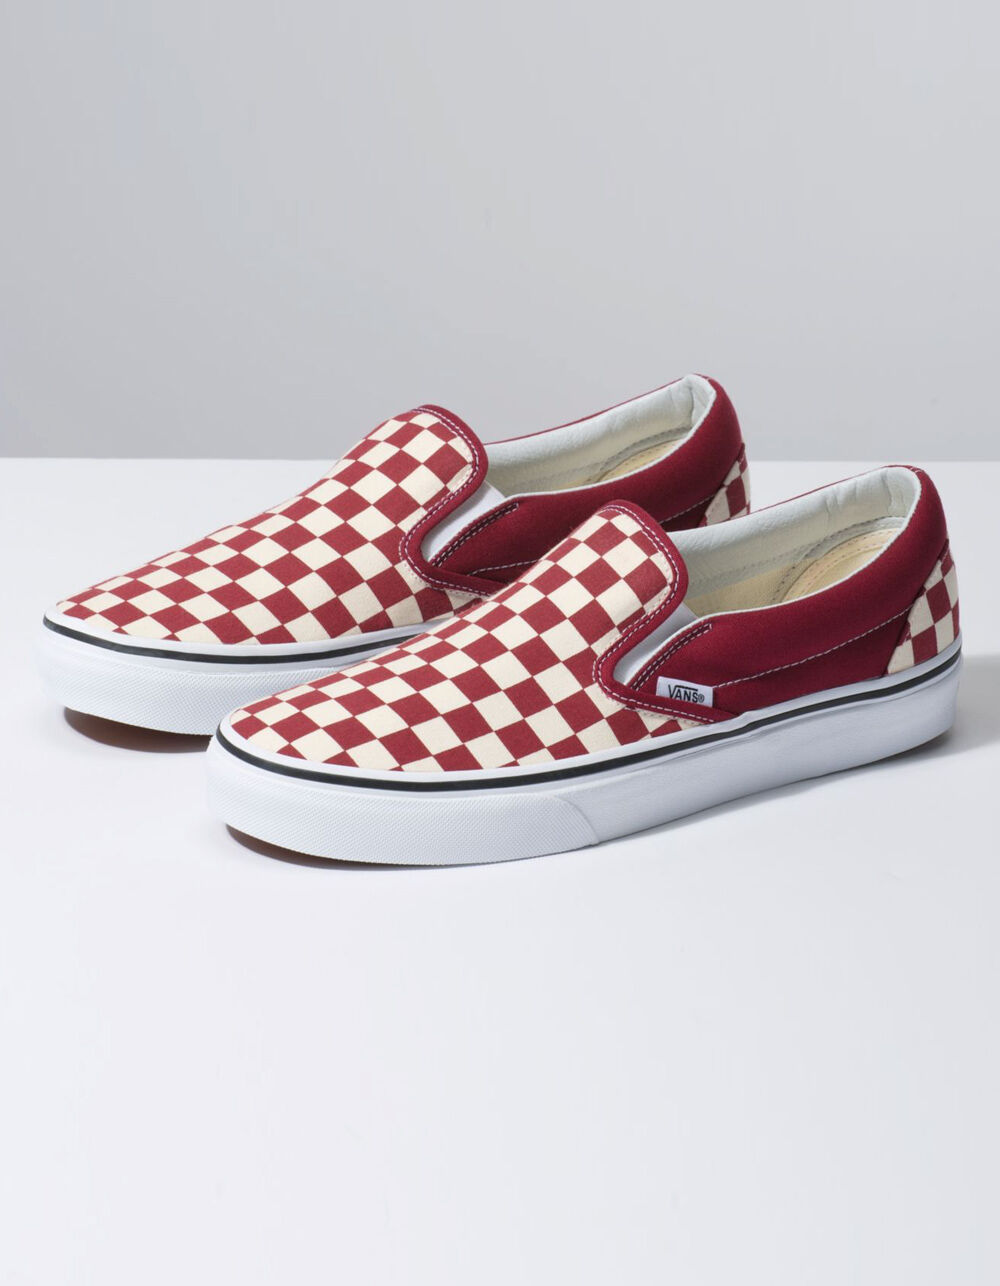 VANS Checkerboard Classic Slip-On Rumba Red & True White Shoes - RUMBA ...